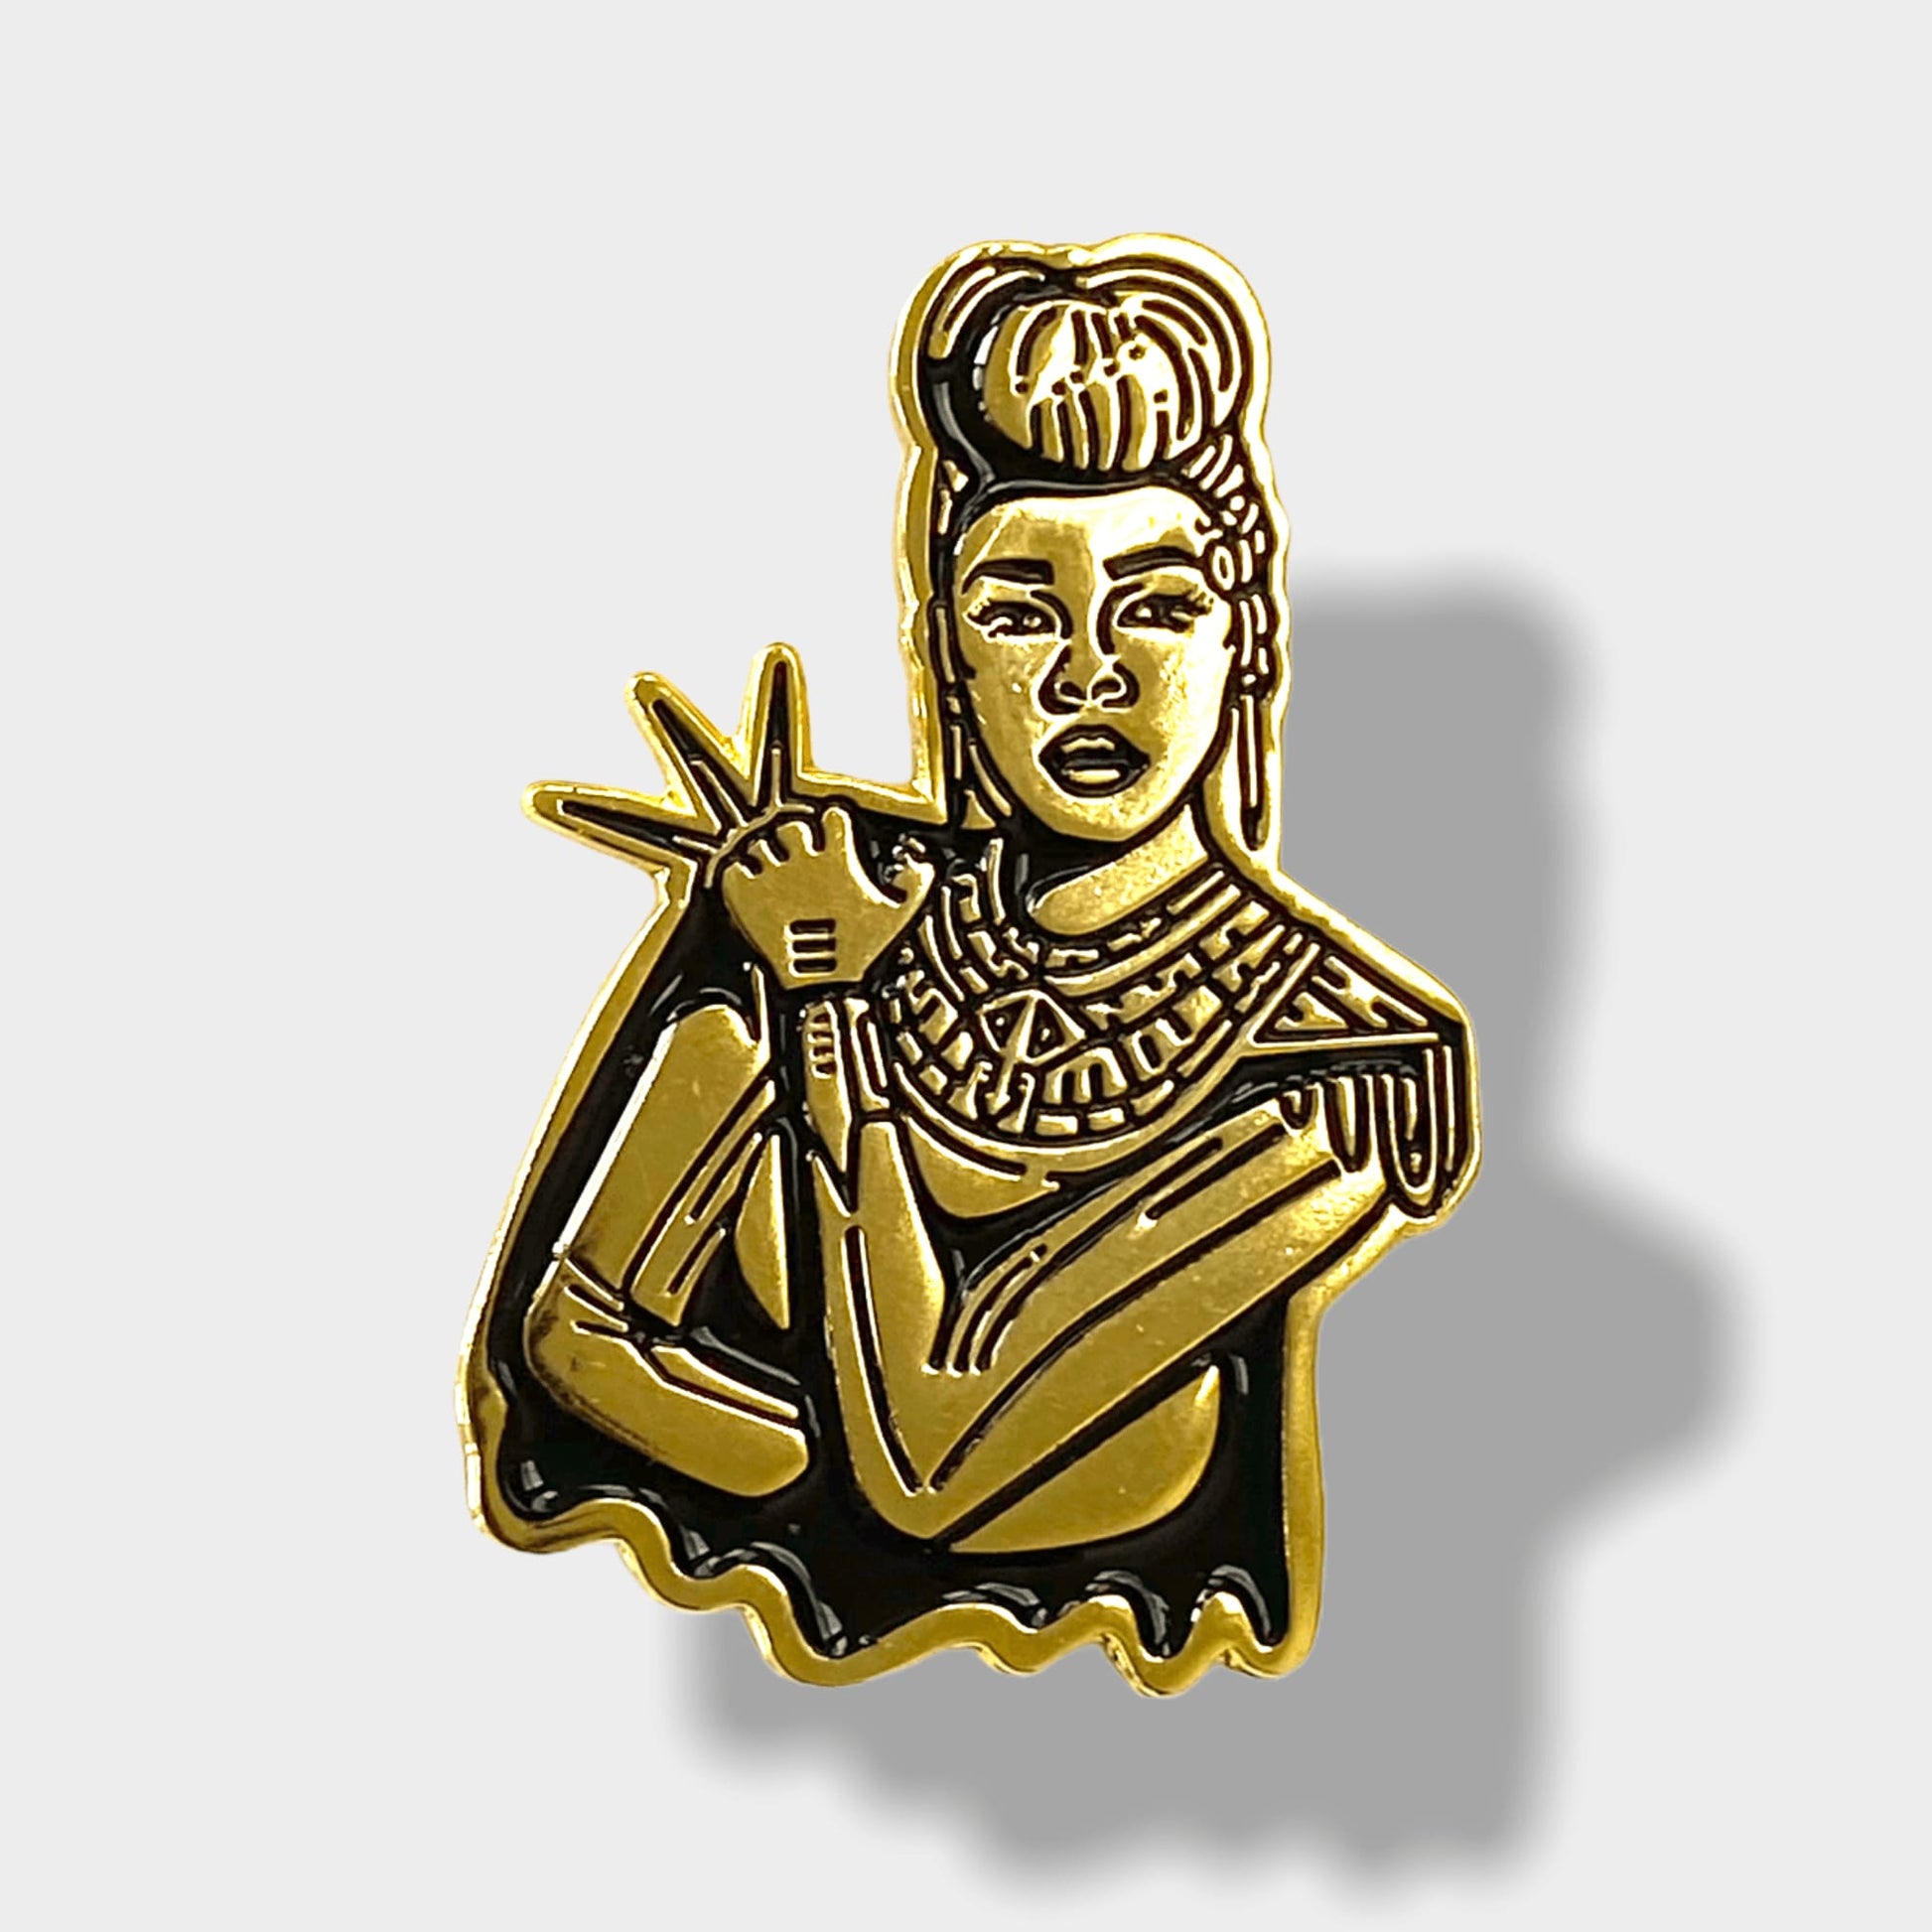 Lady Gold Enamel Pin - B Grade - CosmicMedium